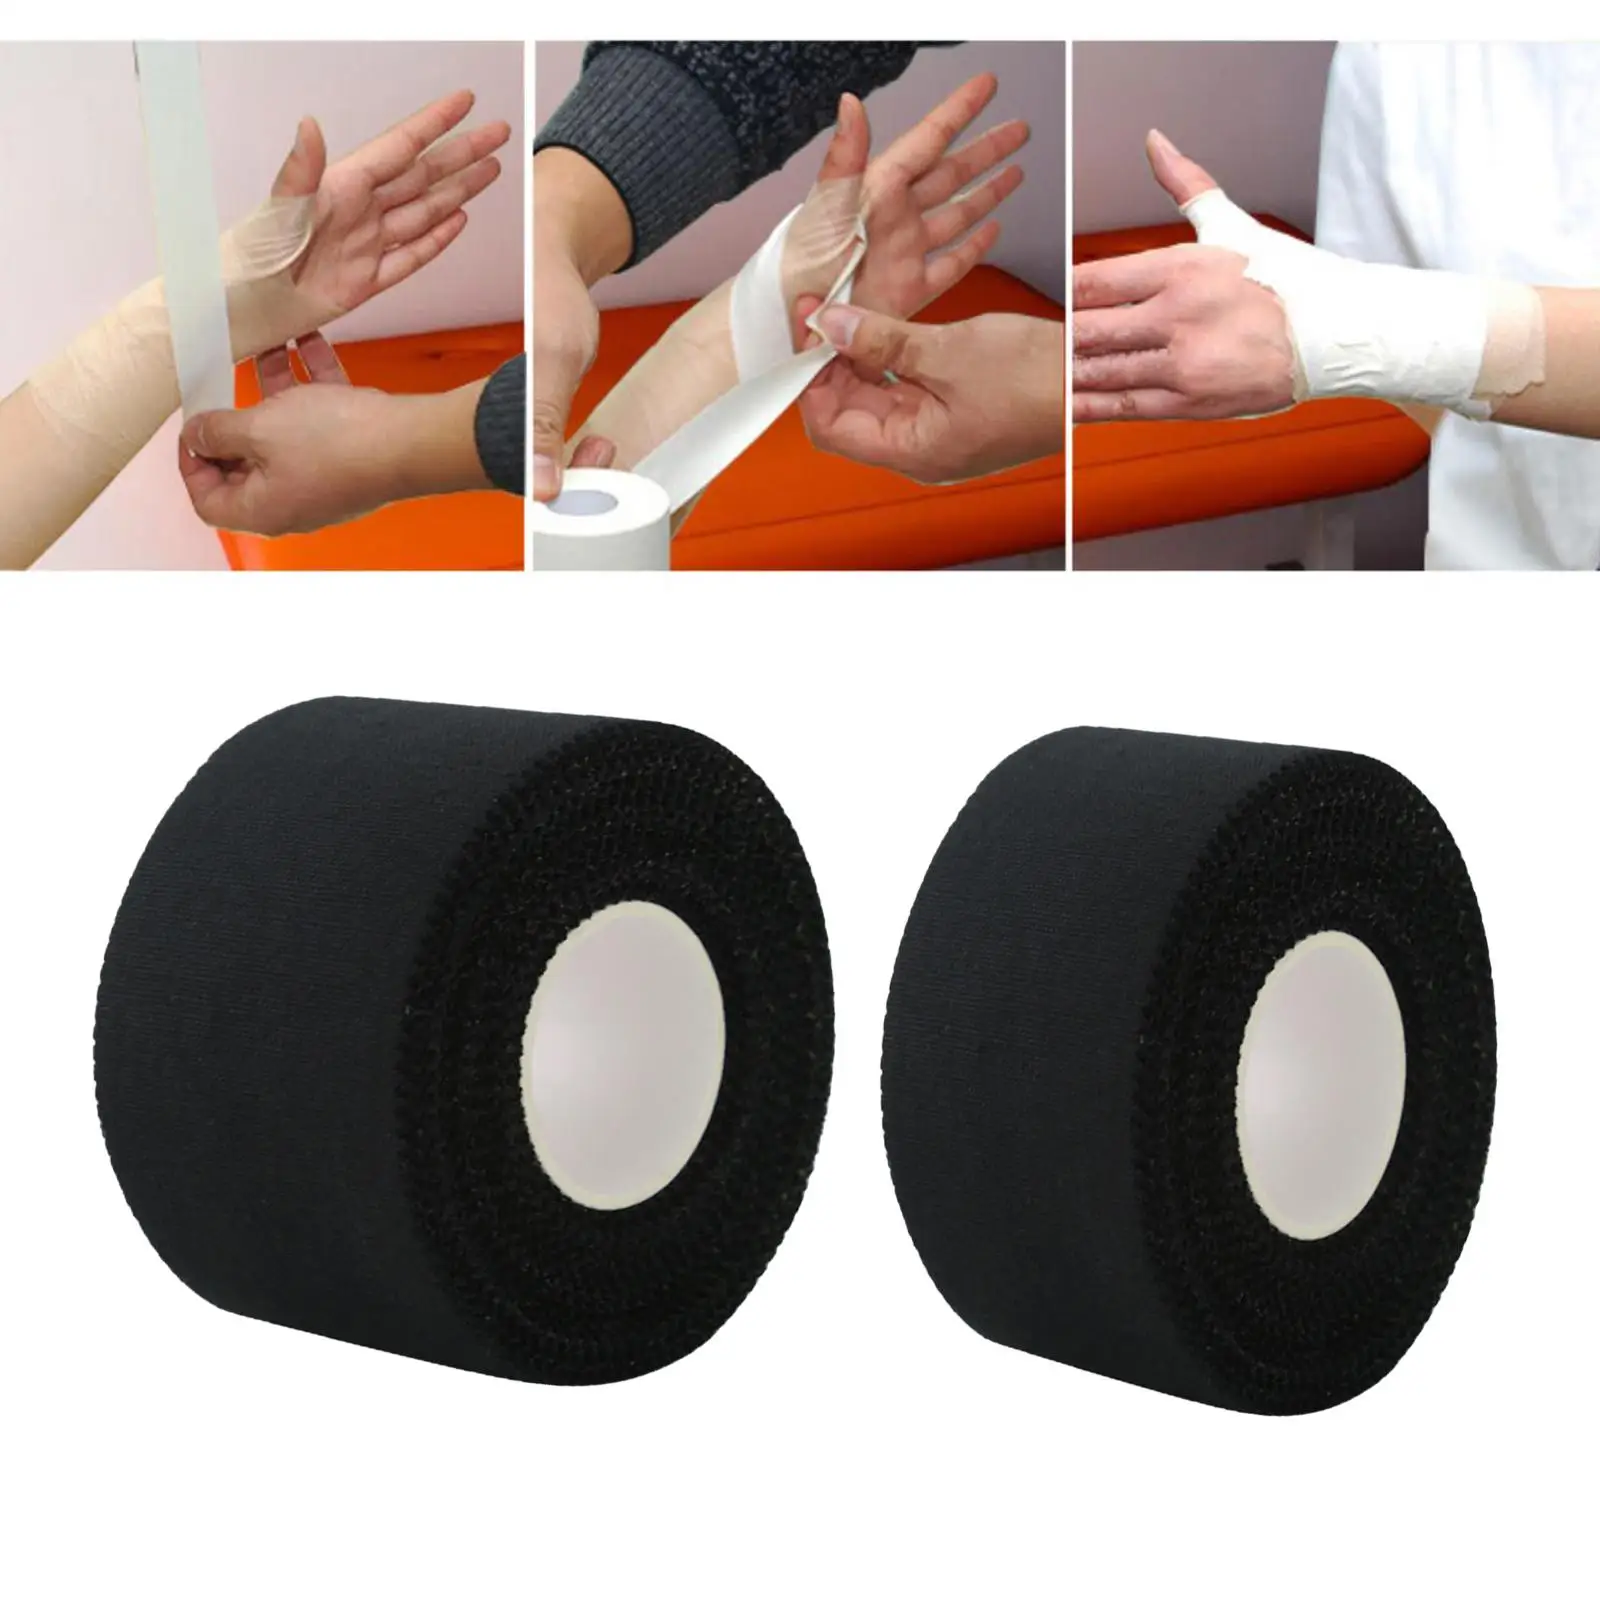 Elastic Cohesive Bandage Self Adhesive Wrap Sports,Cotton Tape Ankle Wrist